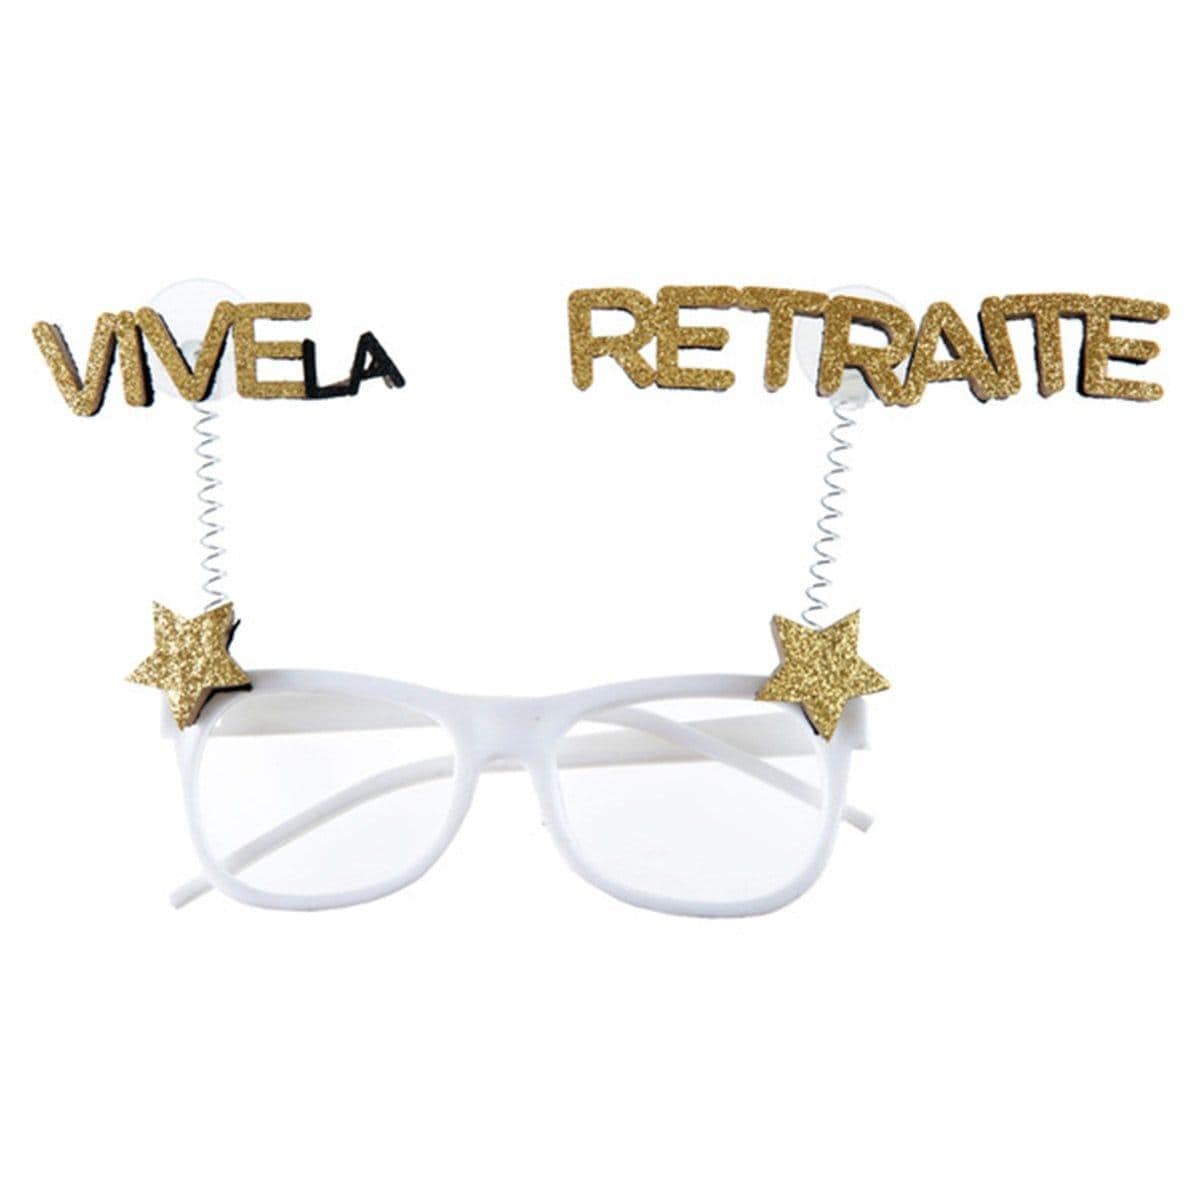 Buy Retirement Vive la Retraite Glittered Glasses sold at Party Expert